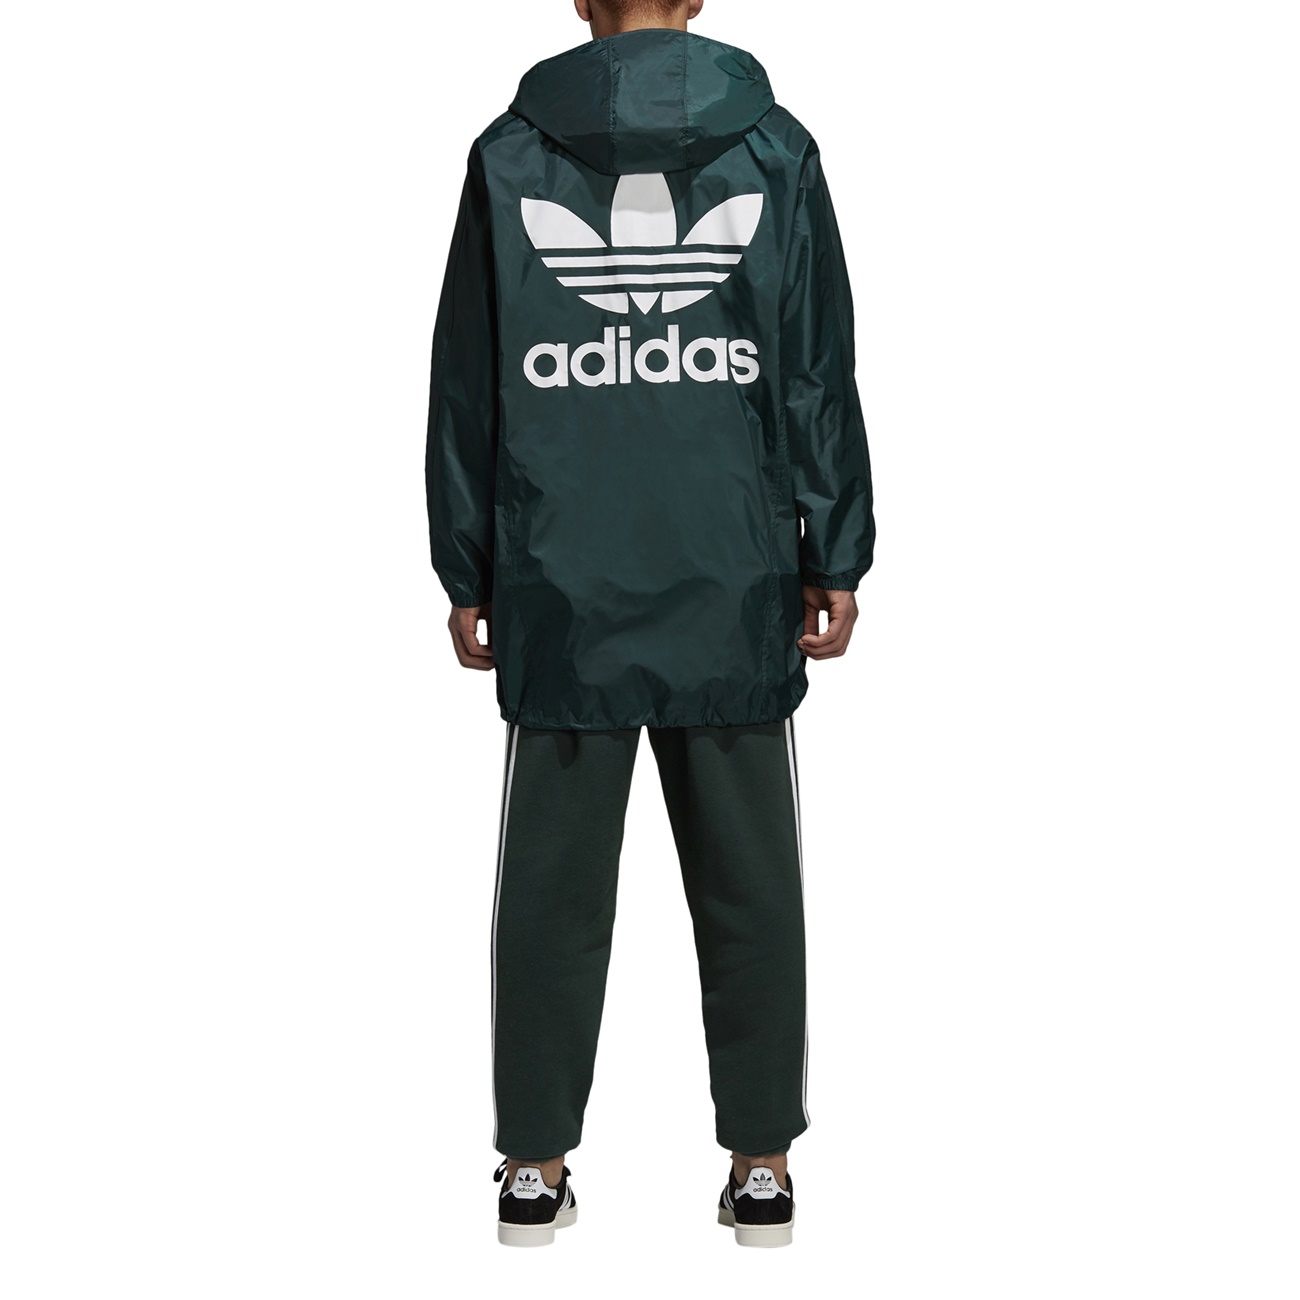 Adidas Originals Trefoil Jacket